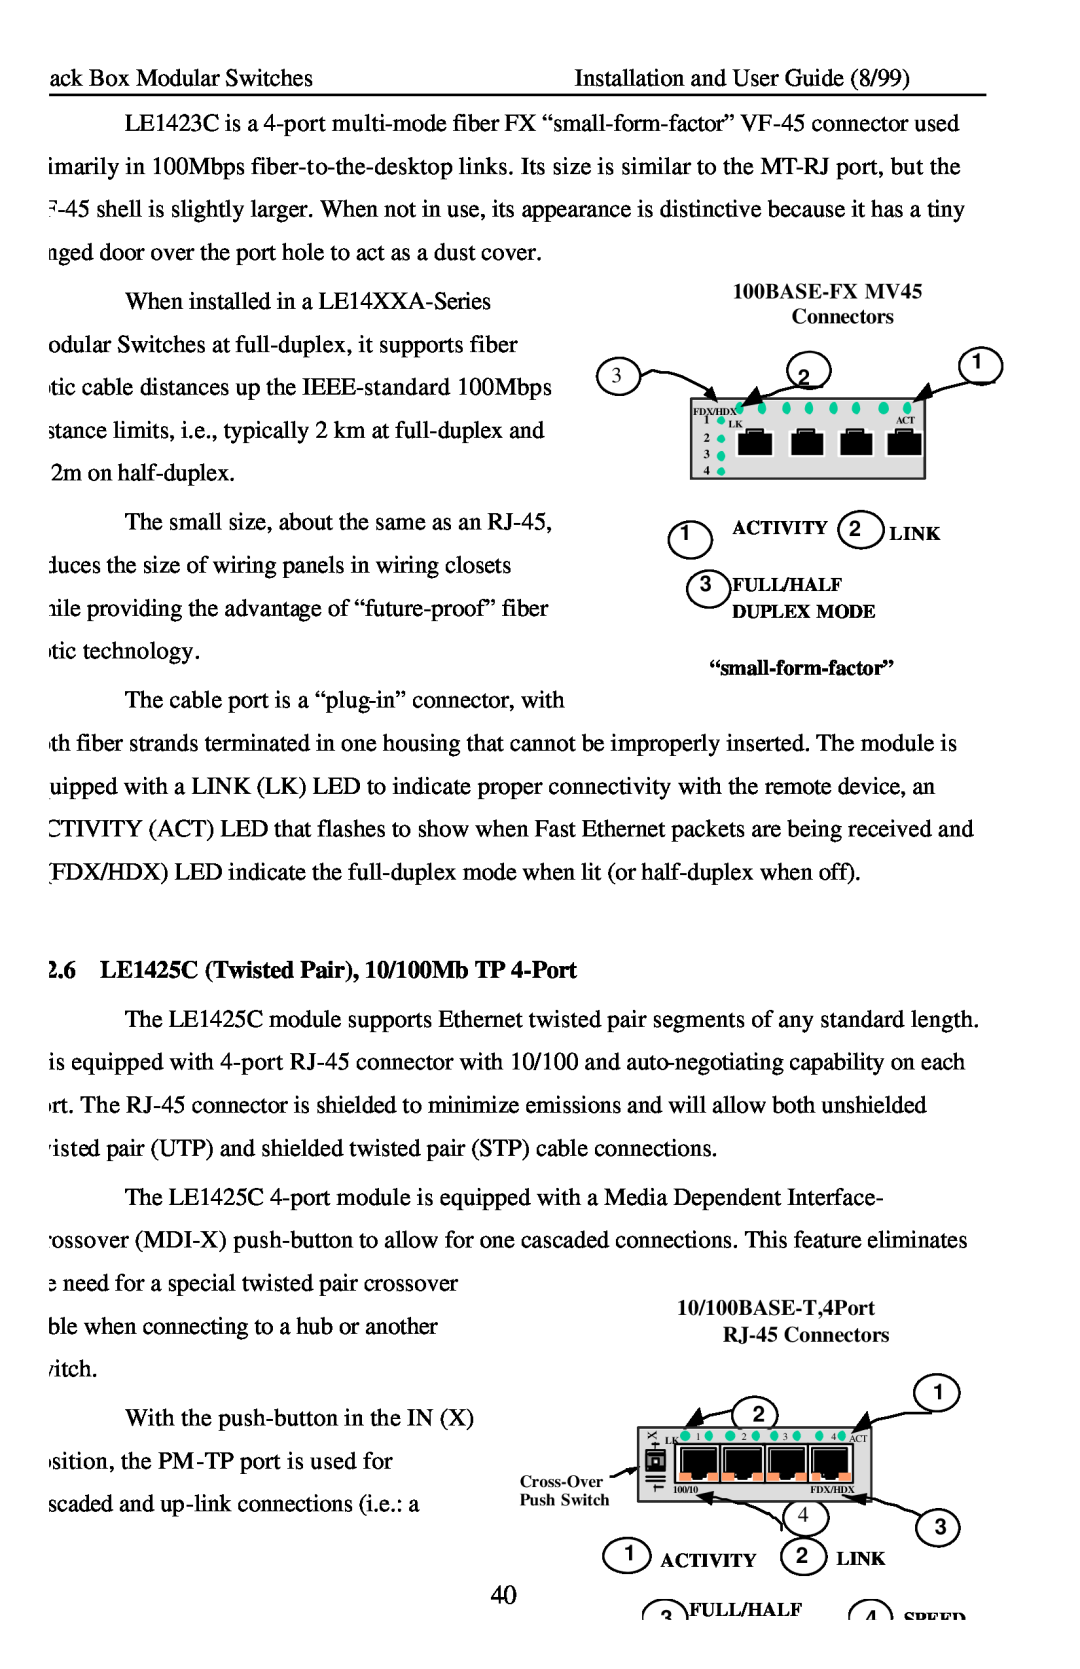 Black Box Modular Switches, LE14XXA manual 2.6LE1425C Twisted Pair, 10/100Mb TP 4-Port 